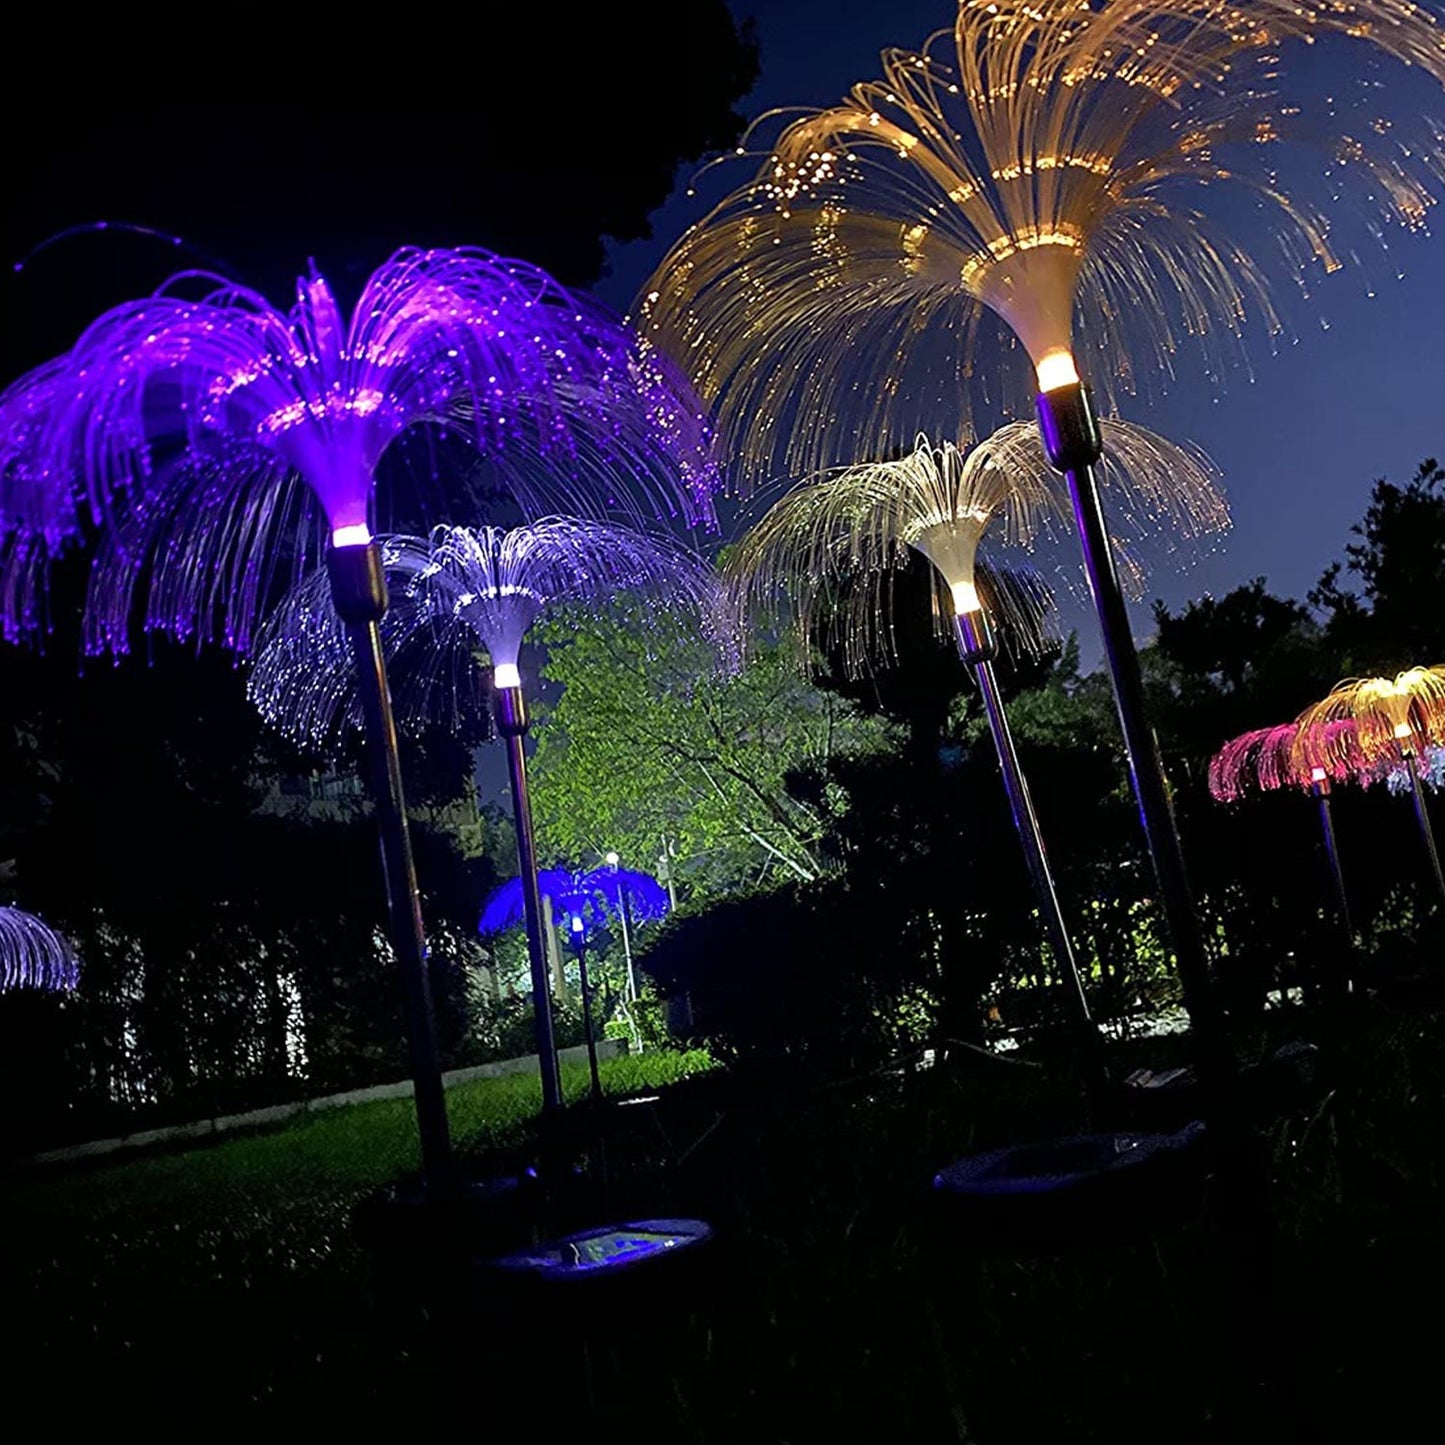 6616 2pcs Garden Solar Outdoor Lights Decorative , 7 Colors Changing RGB Light Waterproof Flower Jellyfish Firework Decor for Garden Patio Landscape Pathway Yard Holiday Decor Dukandaily